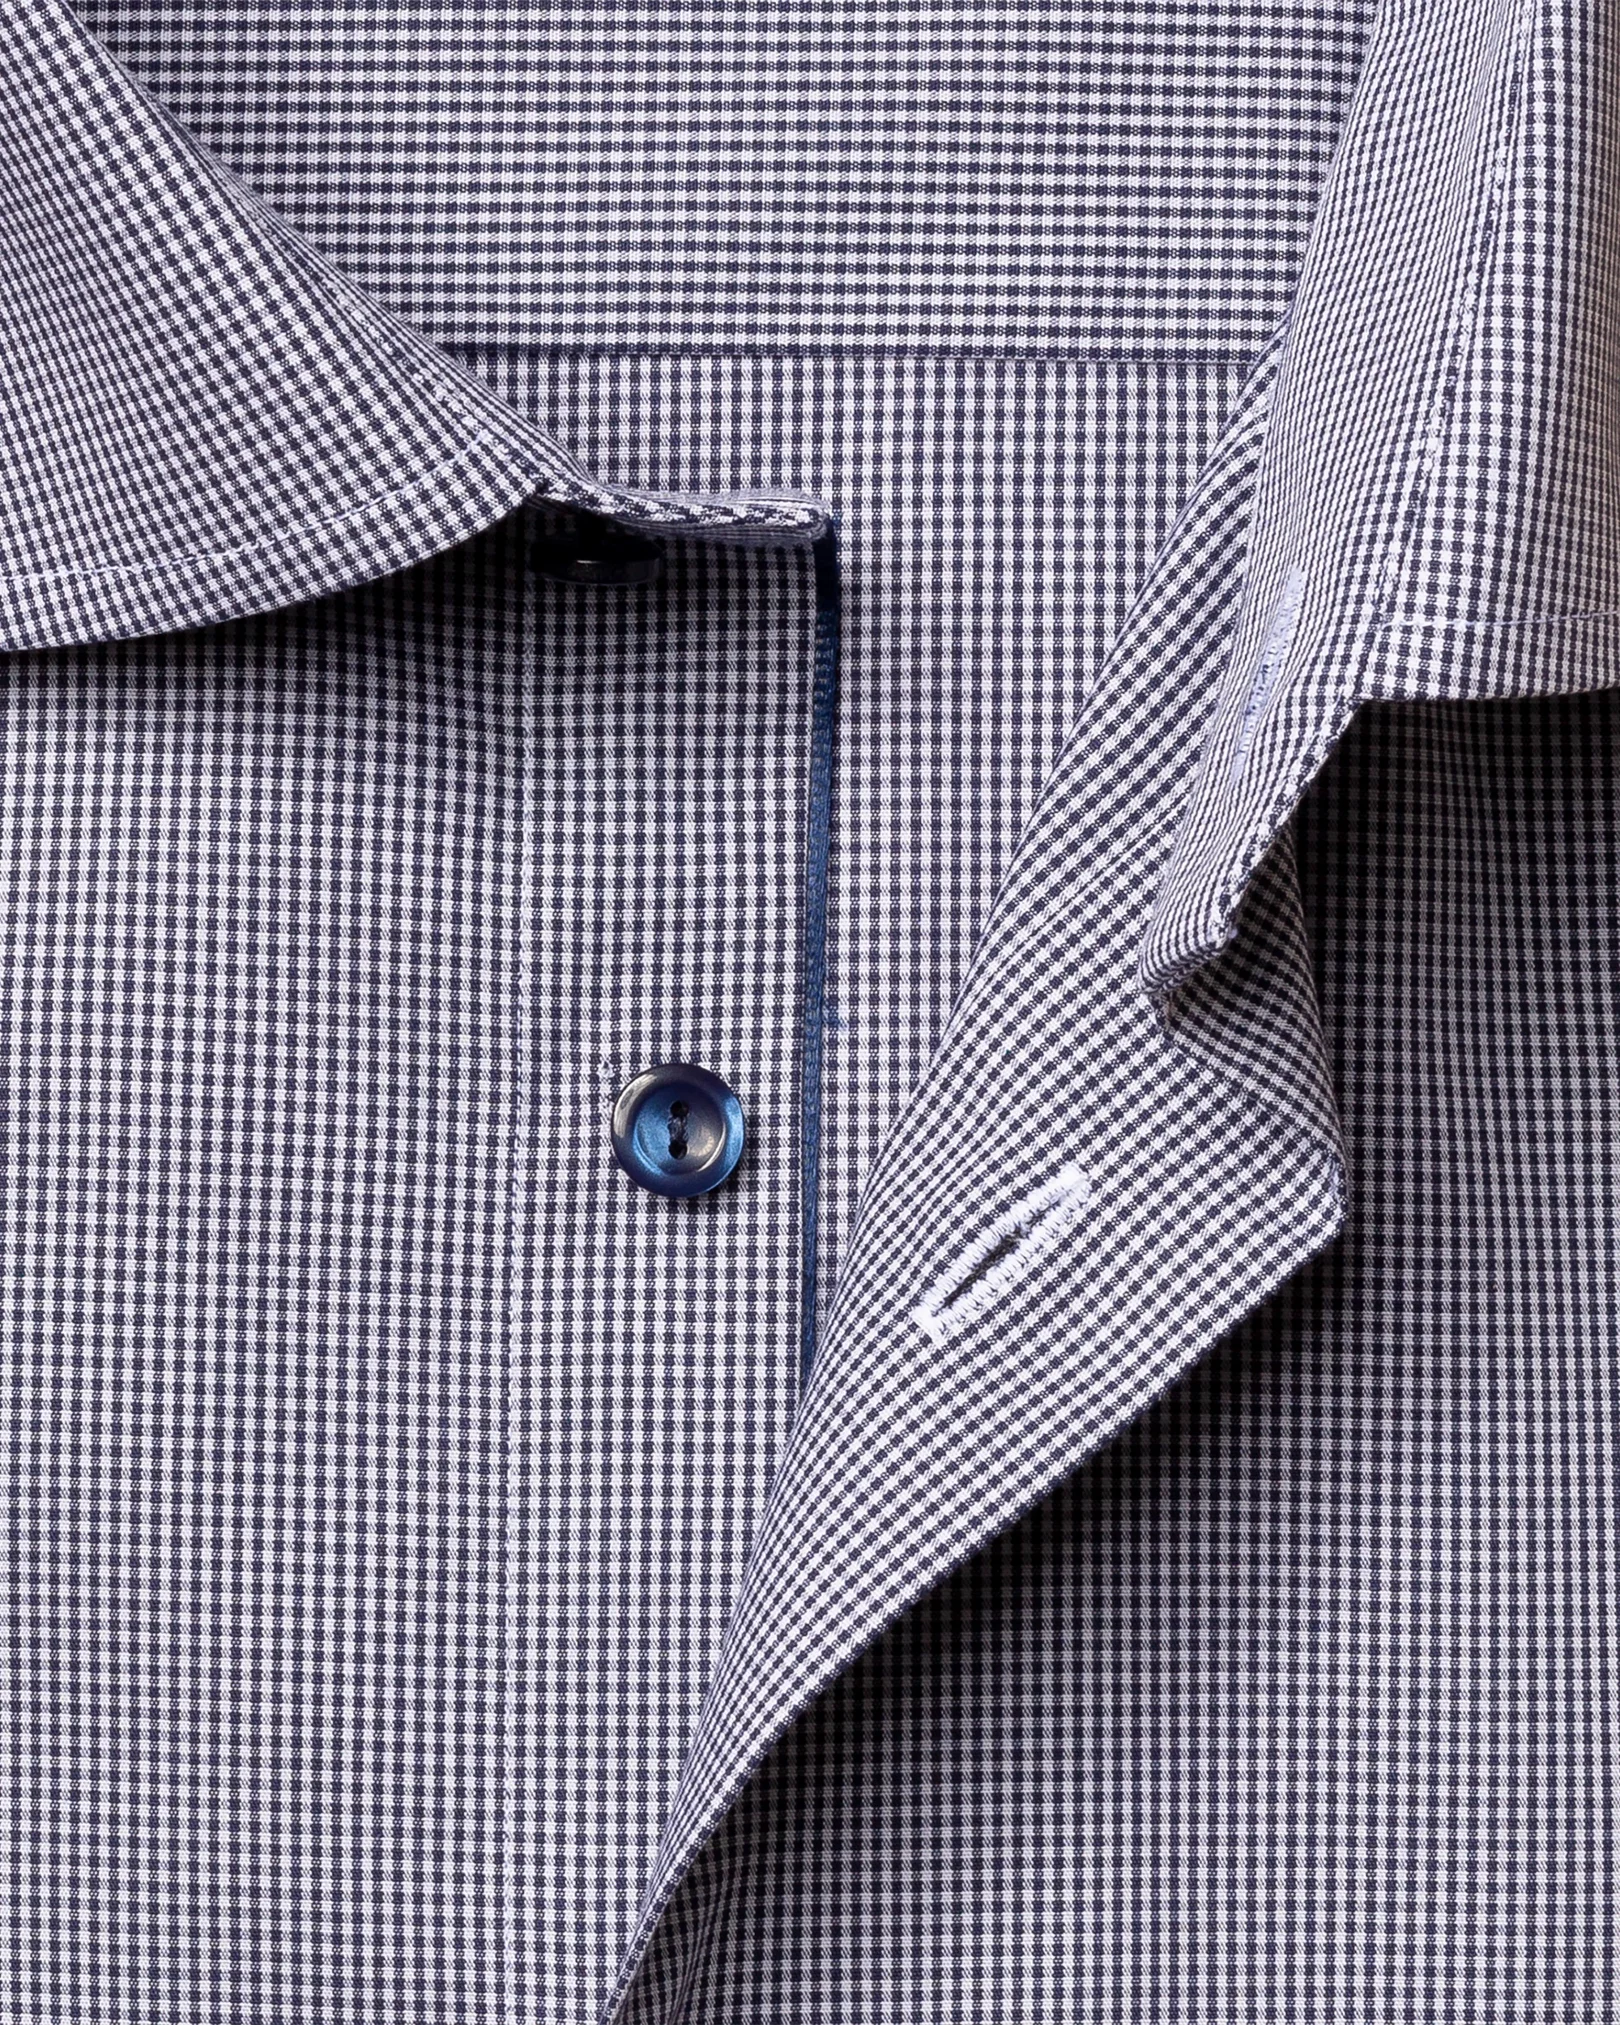 Eton - dark blue gingham poplin shirt cut away